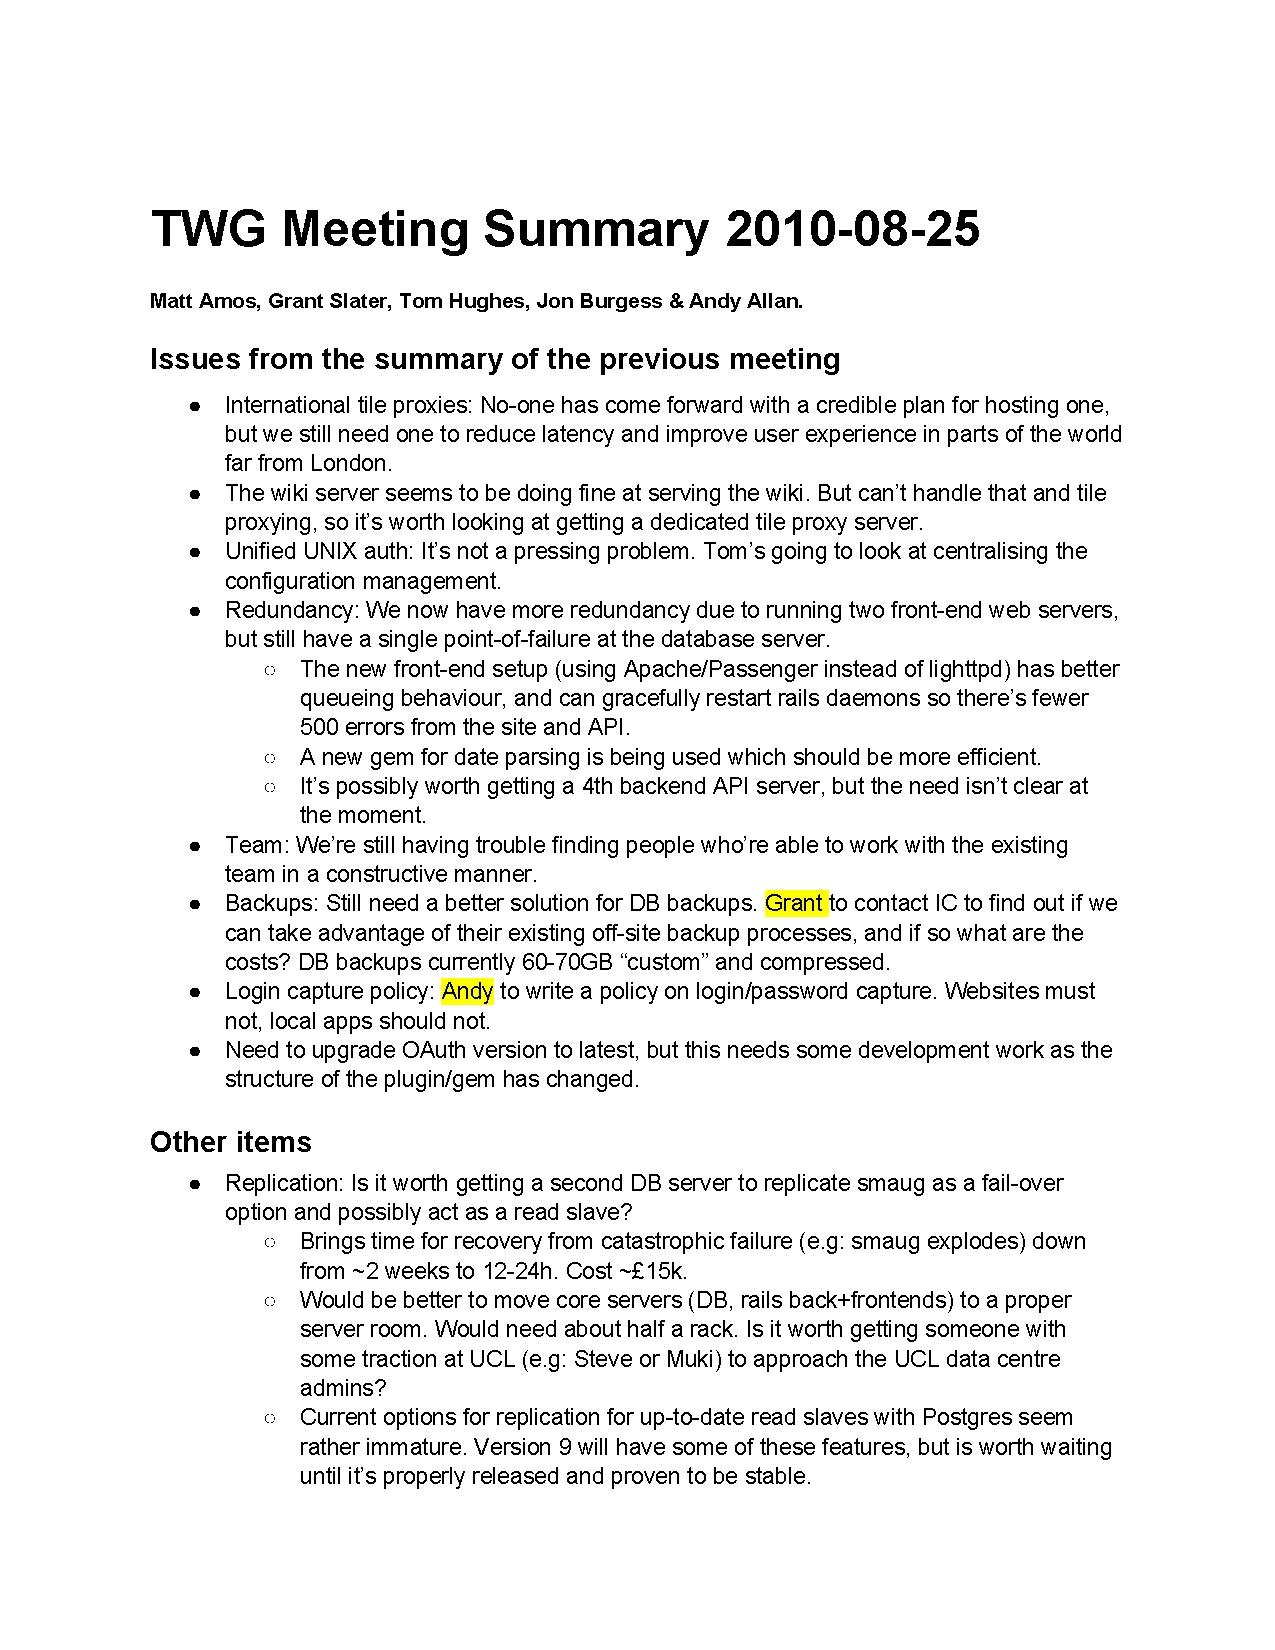 TWGMeetingSummary2010-08-25.pdf